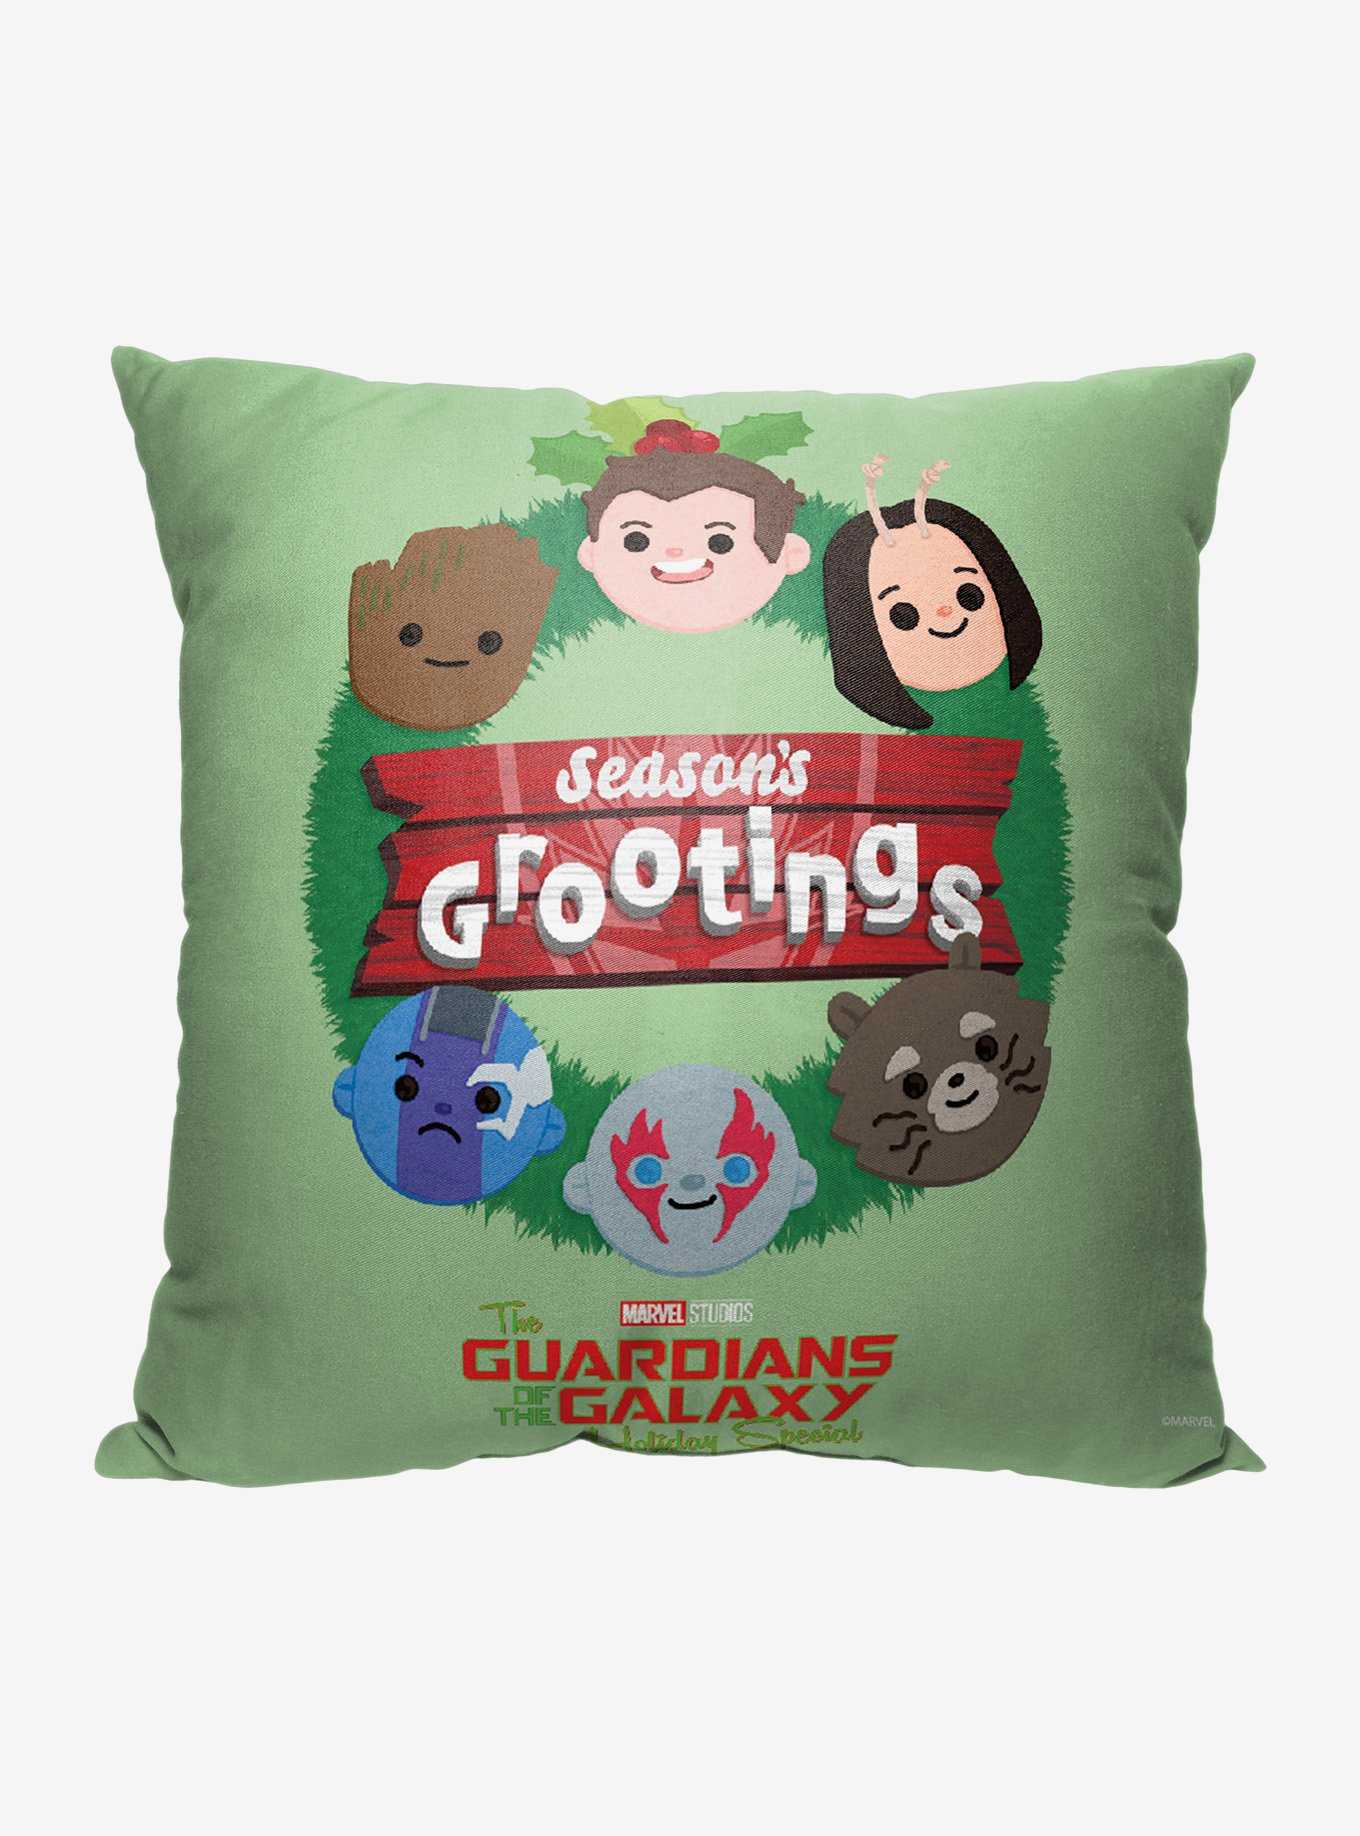 Marvel Guardians Of The Galaxy Seasons Grootings Wreath Printed Throw Pillow, , hi-res